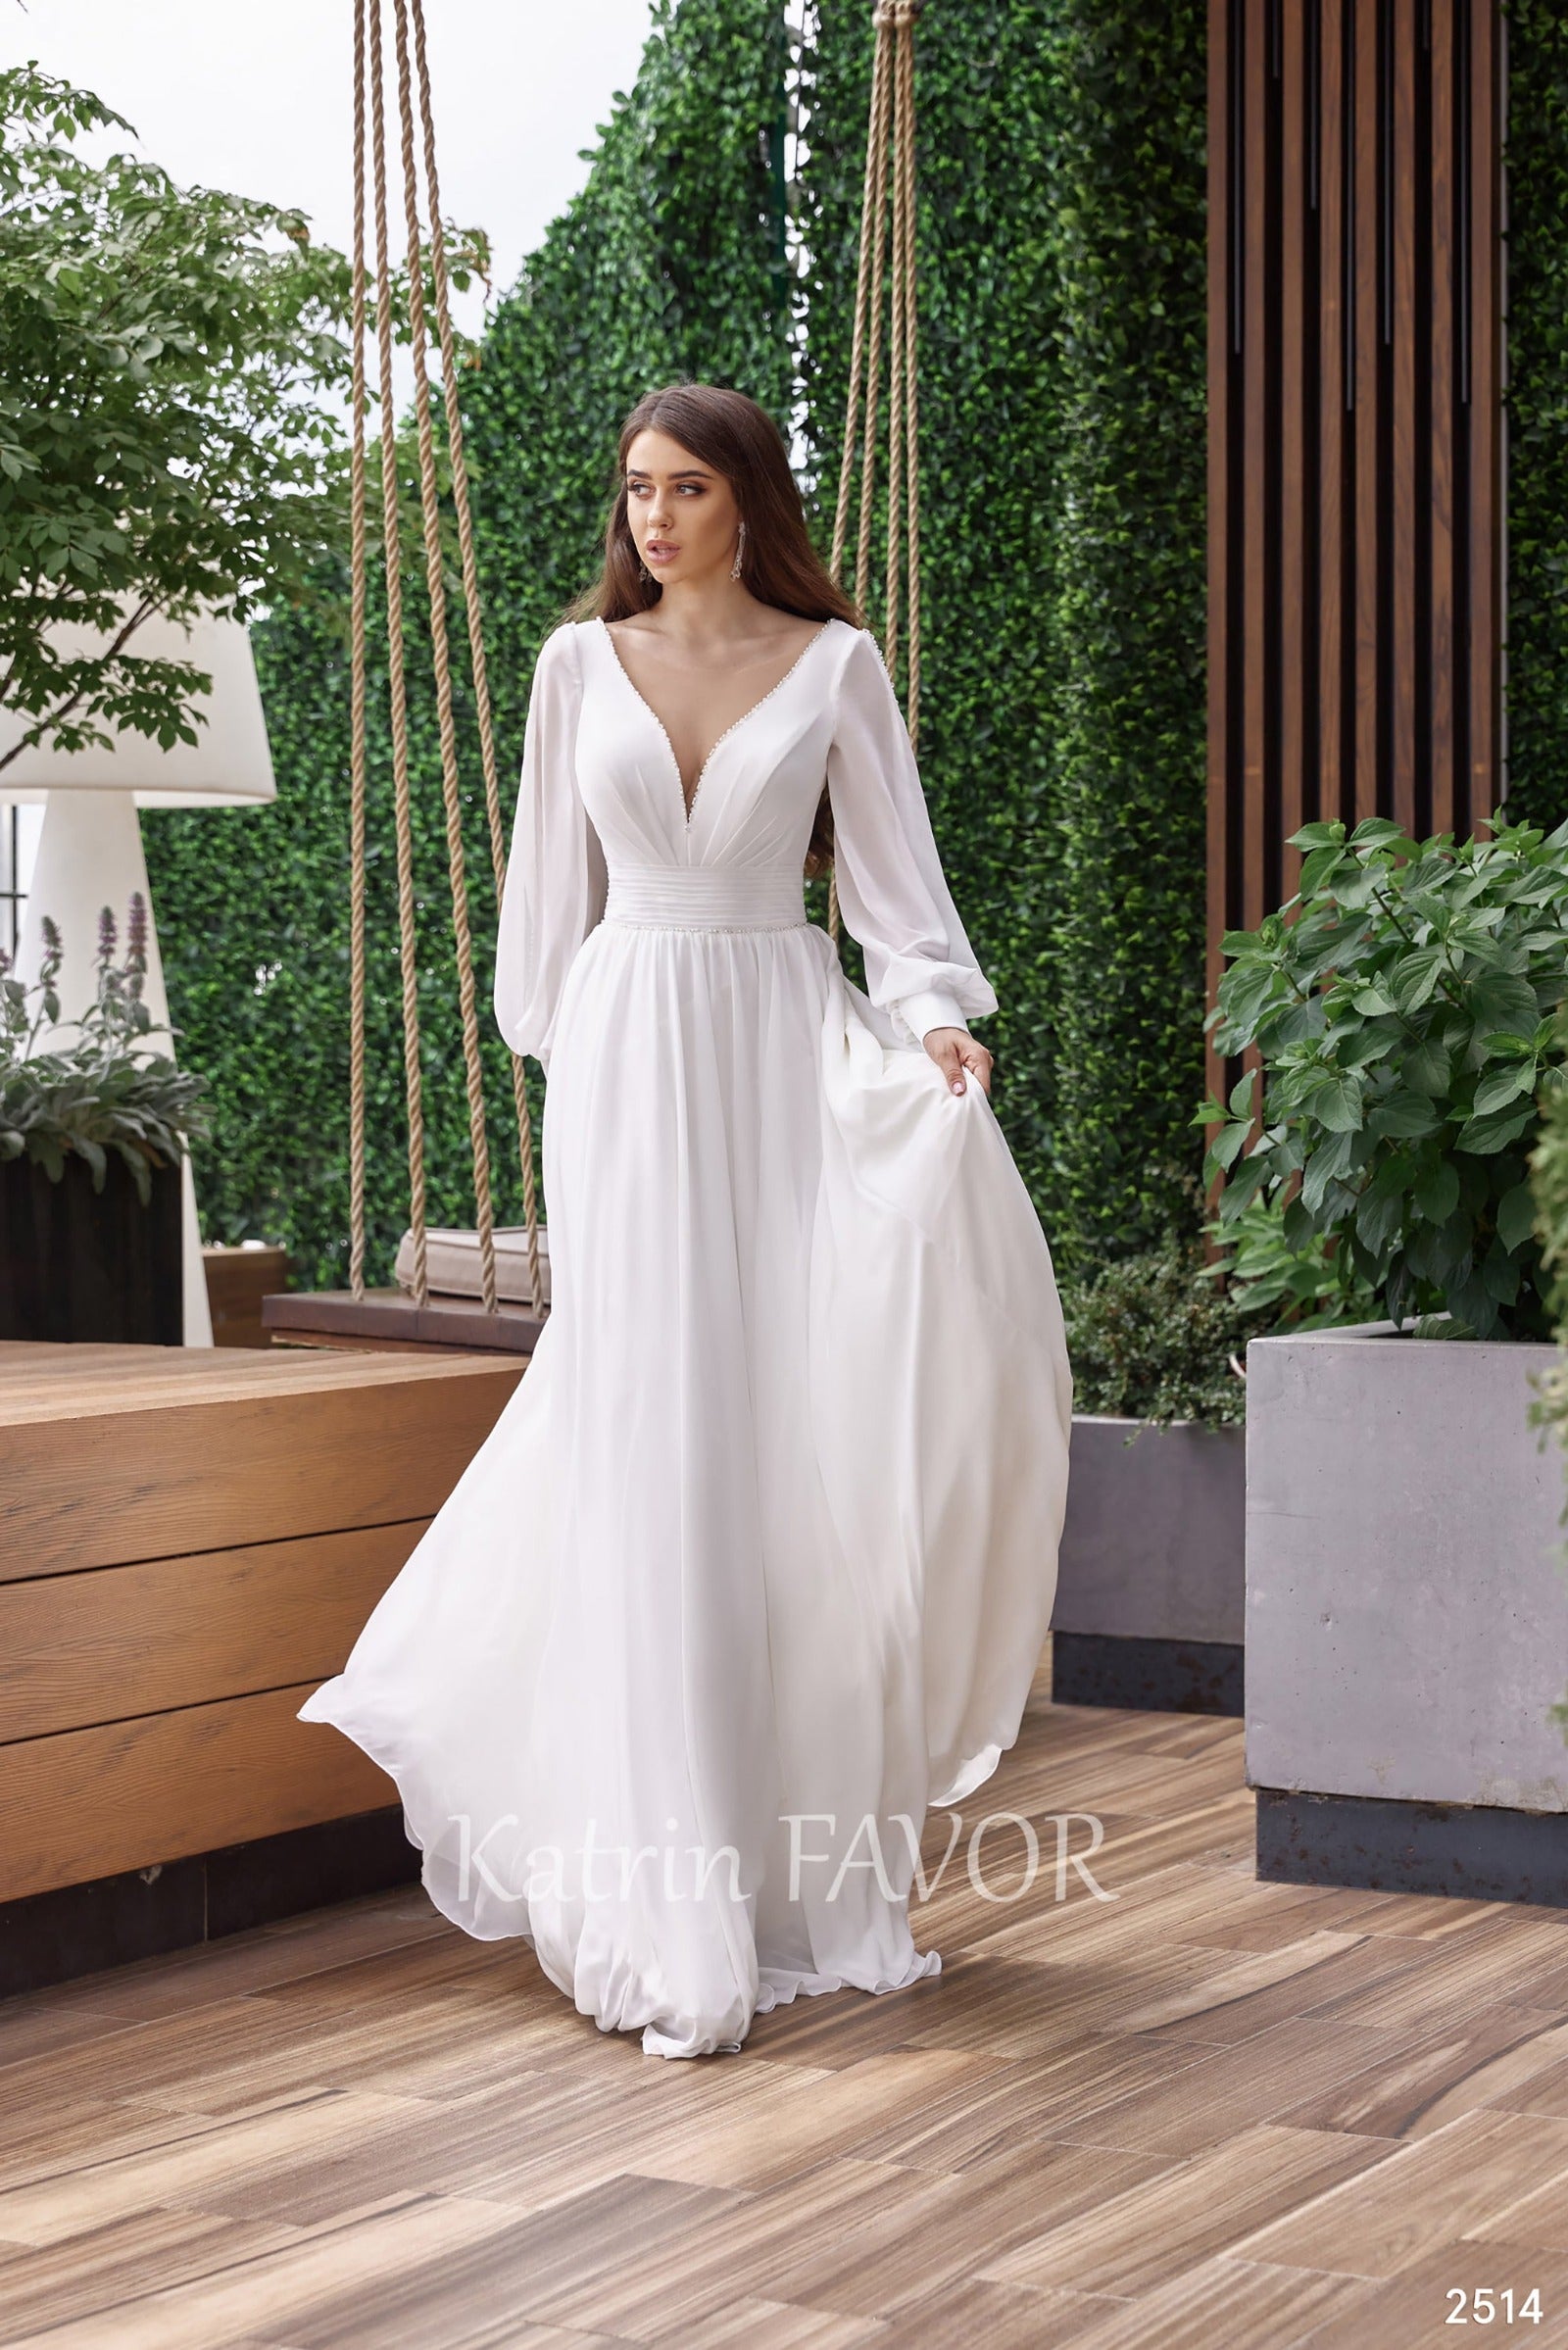 KatrinFAVORboutique-Chiffon bohemian minimalist wedding dress